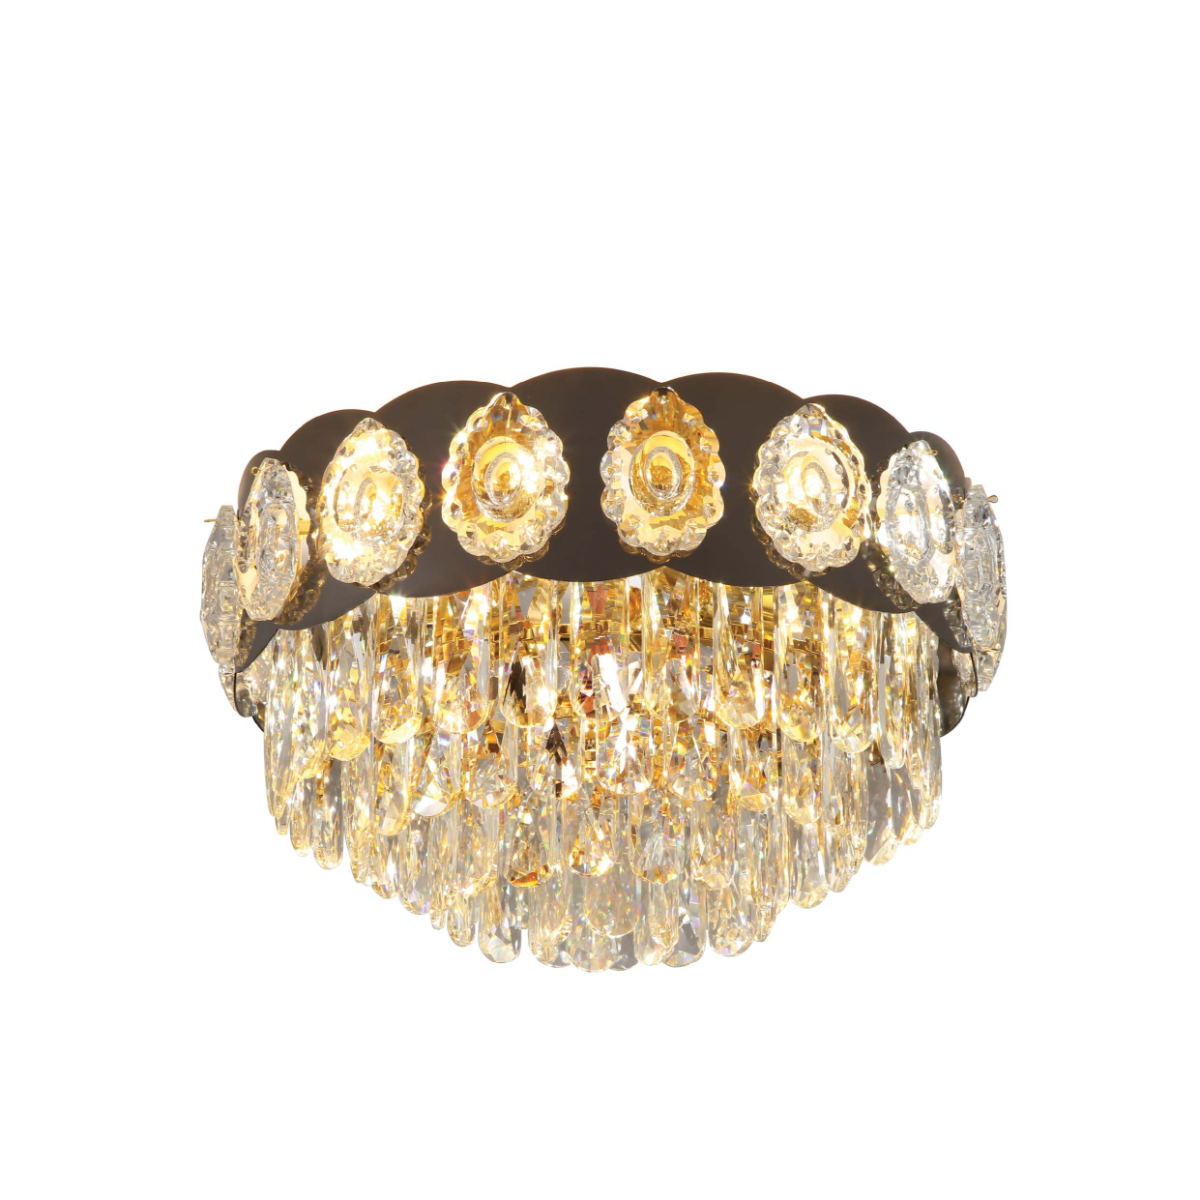 Main image of Luxury Clear Crystal Flush Modern Ceiling Chandelier Light Gold | TEKLED 159-18007